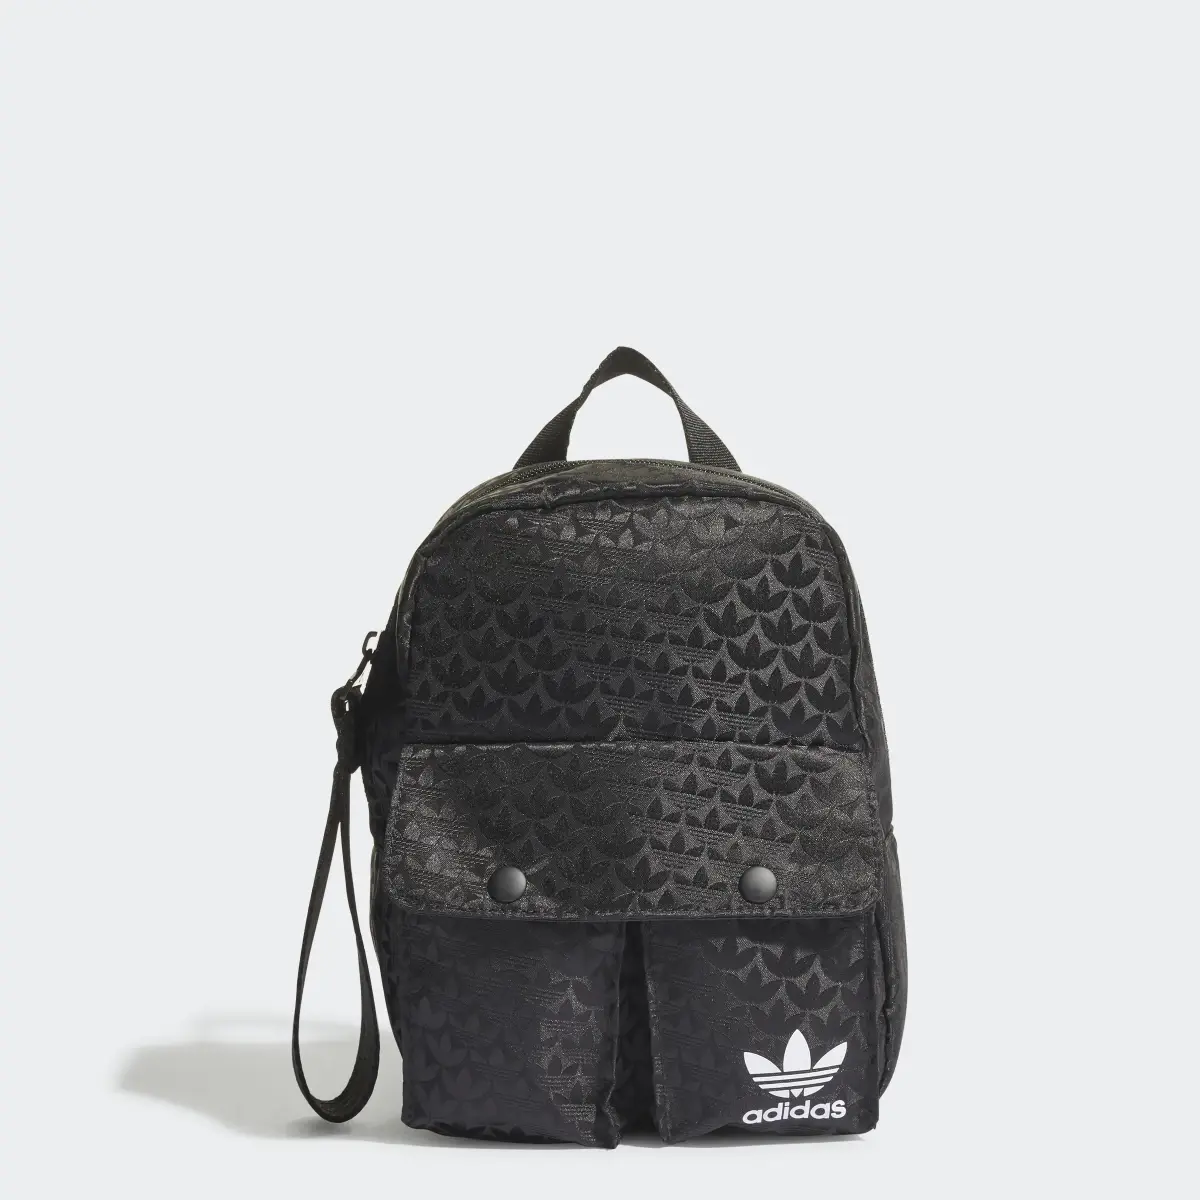 Adidas Mini sac à dos. 1